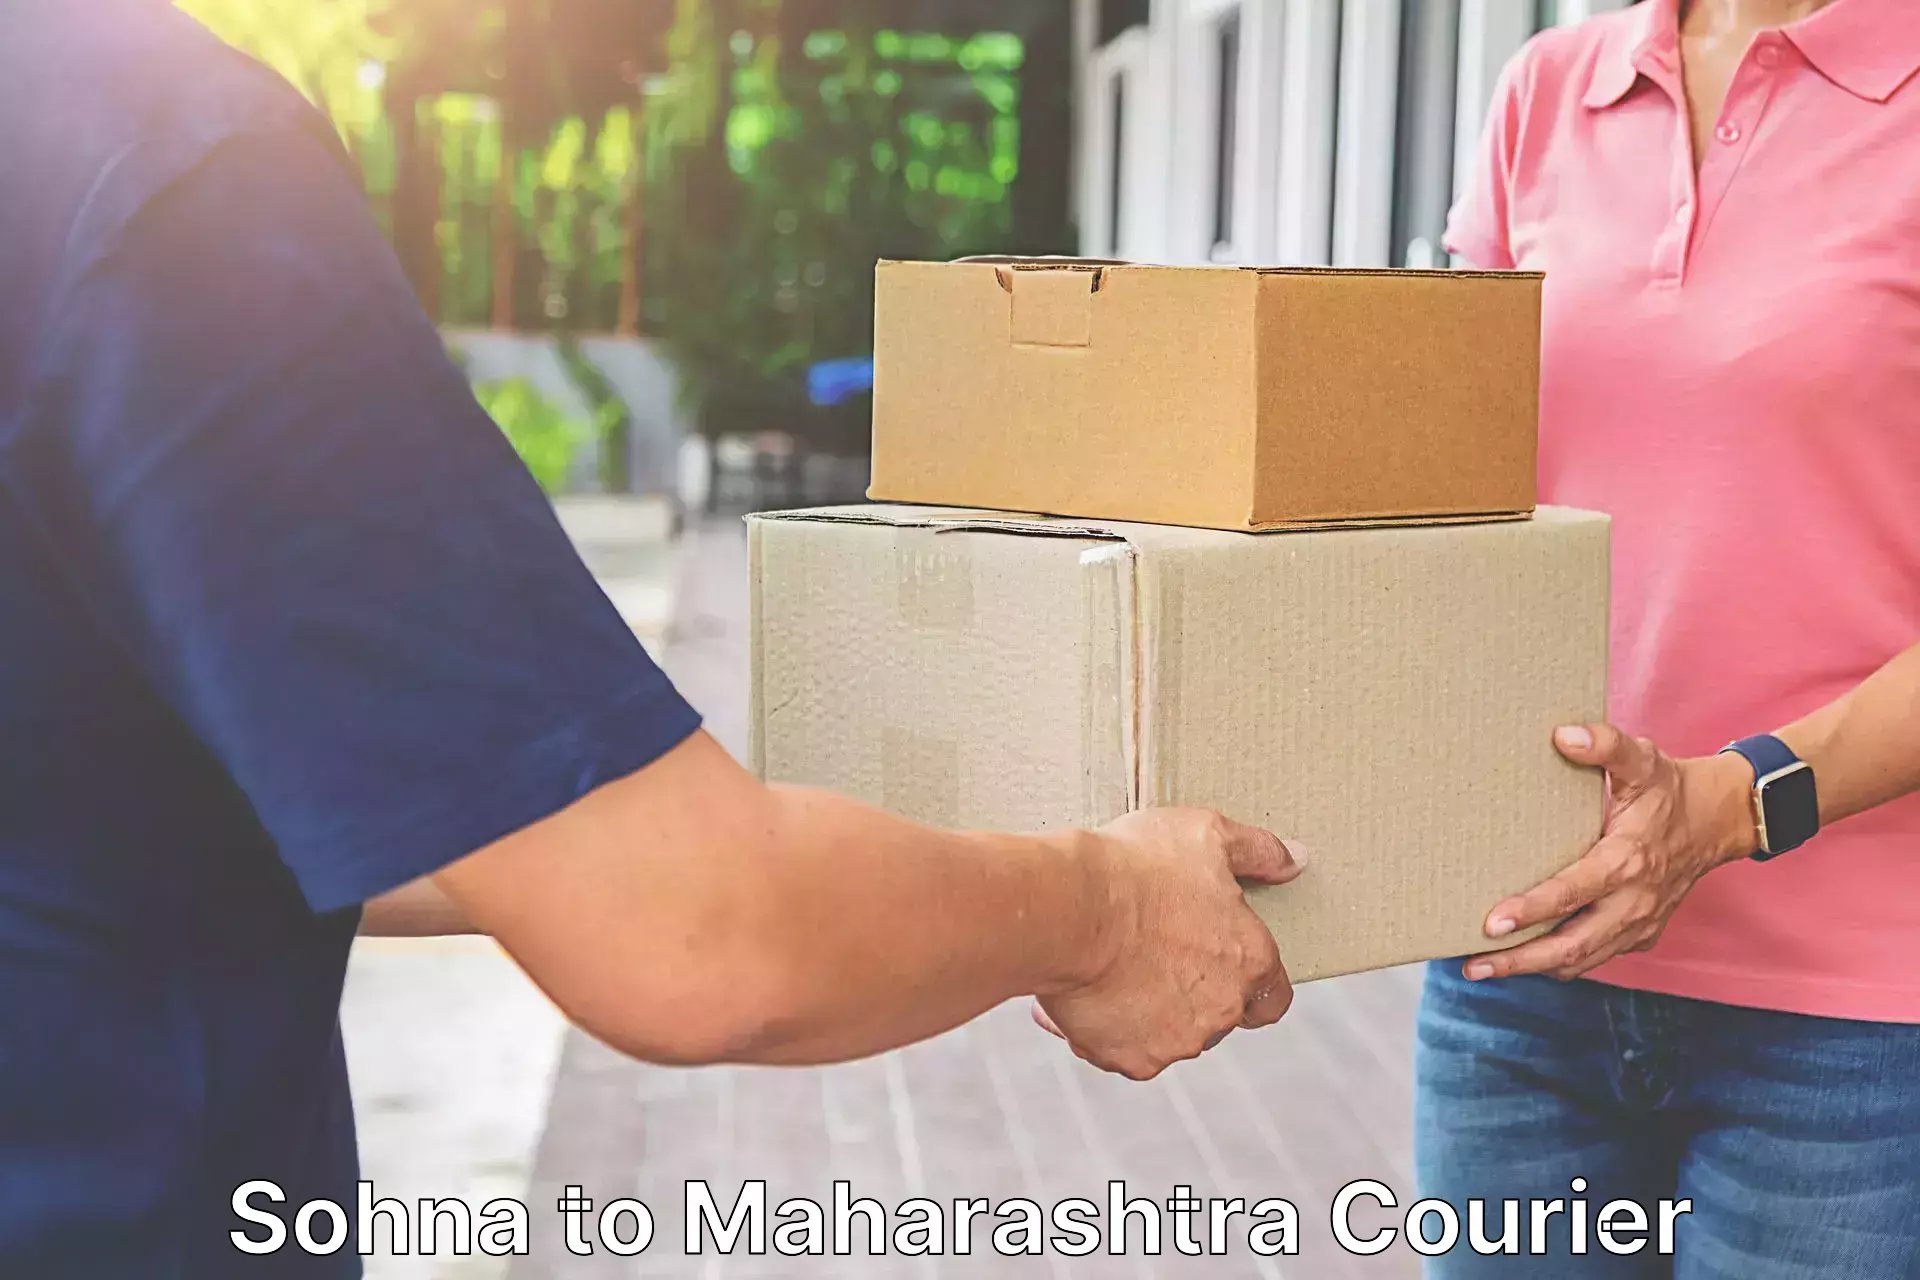 Local delivery service Sohna to Georai